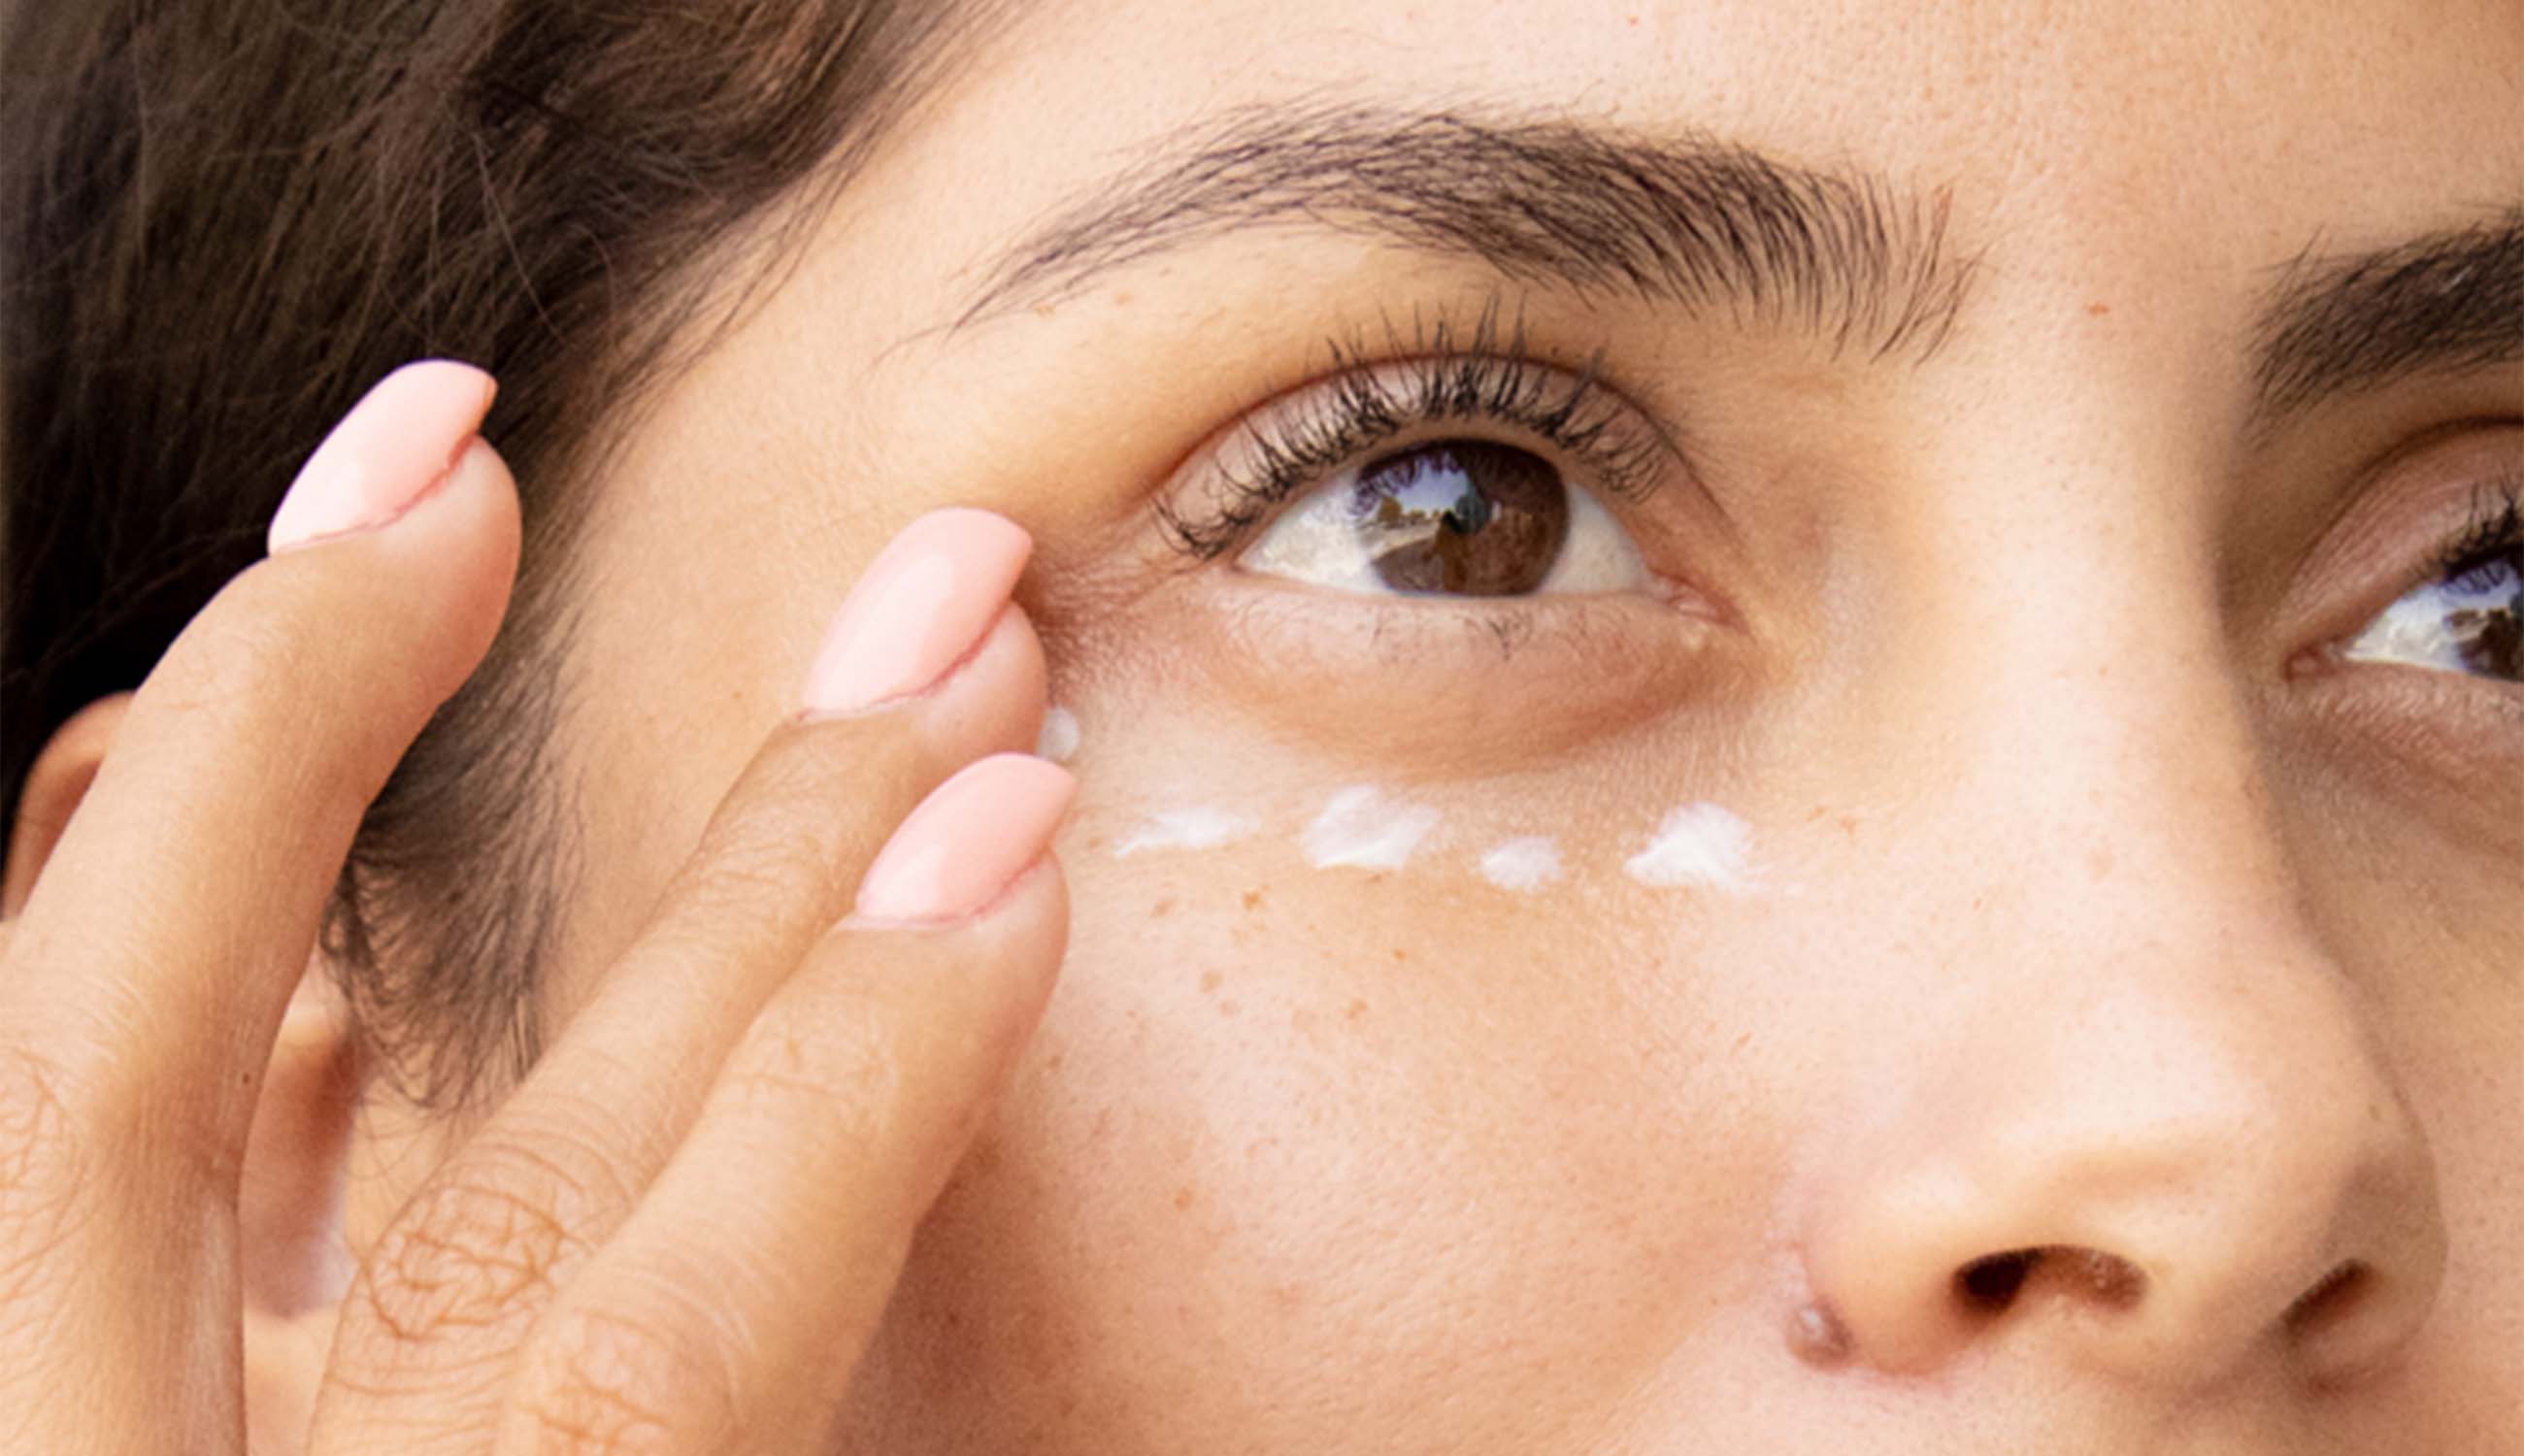 main_woman applying eye cream.jpg